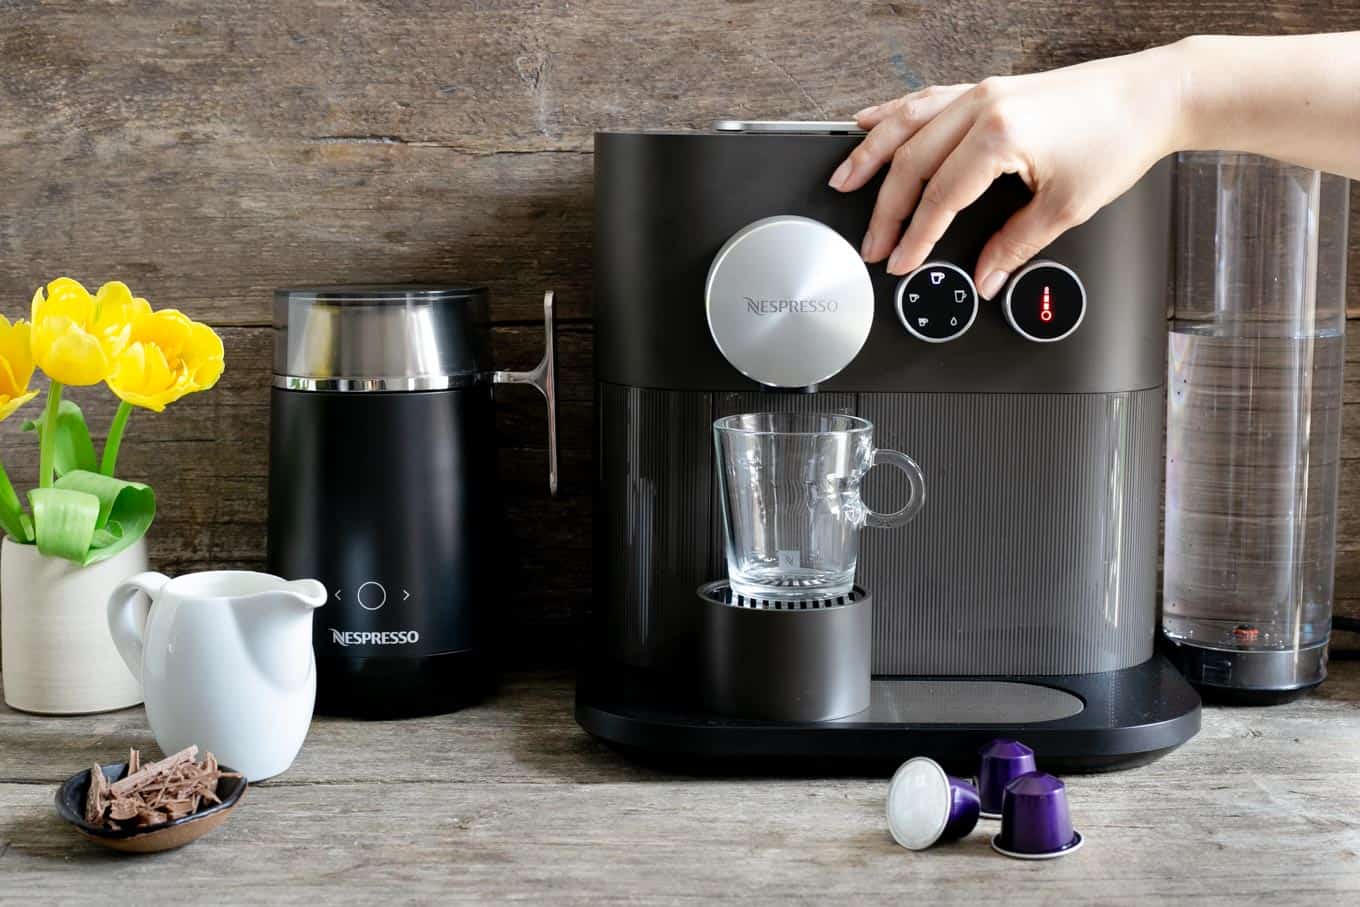 Nespresso Expert coffee machine #coffeelover #coffeerecipes | via @annabanana.co